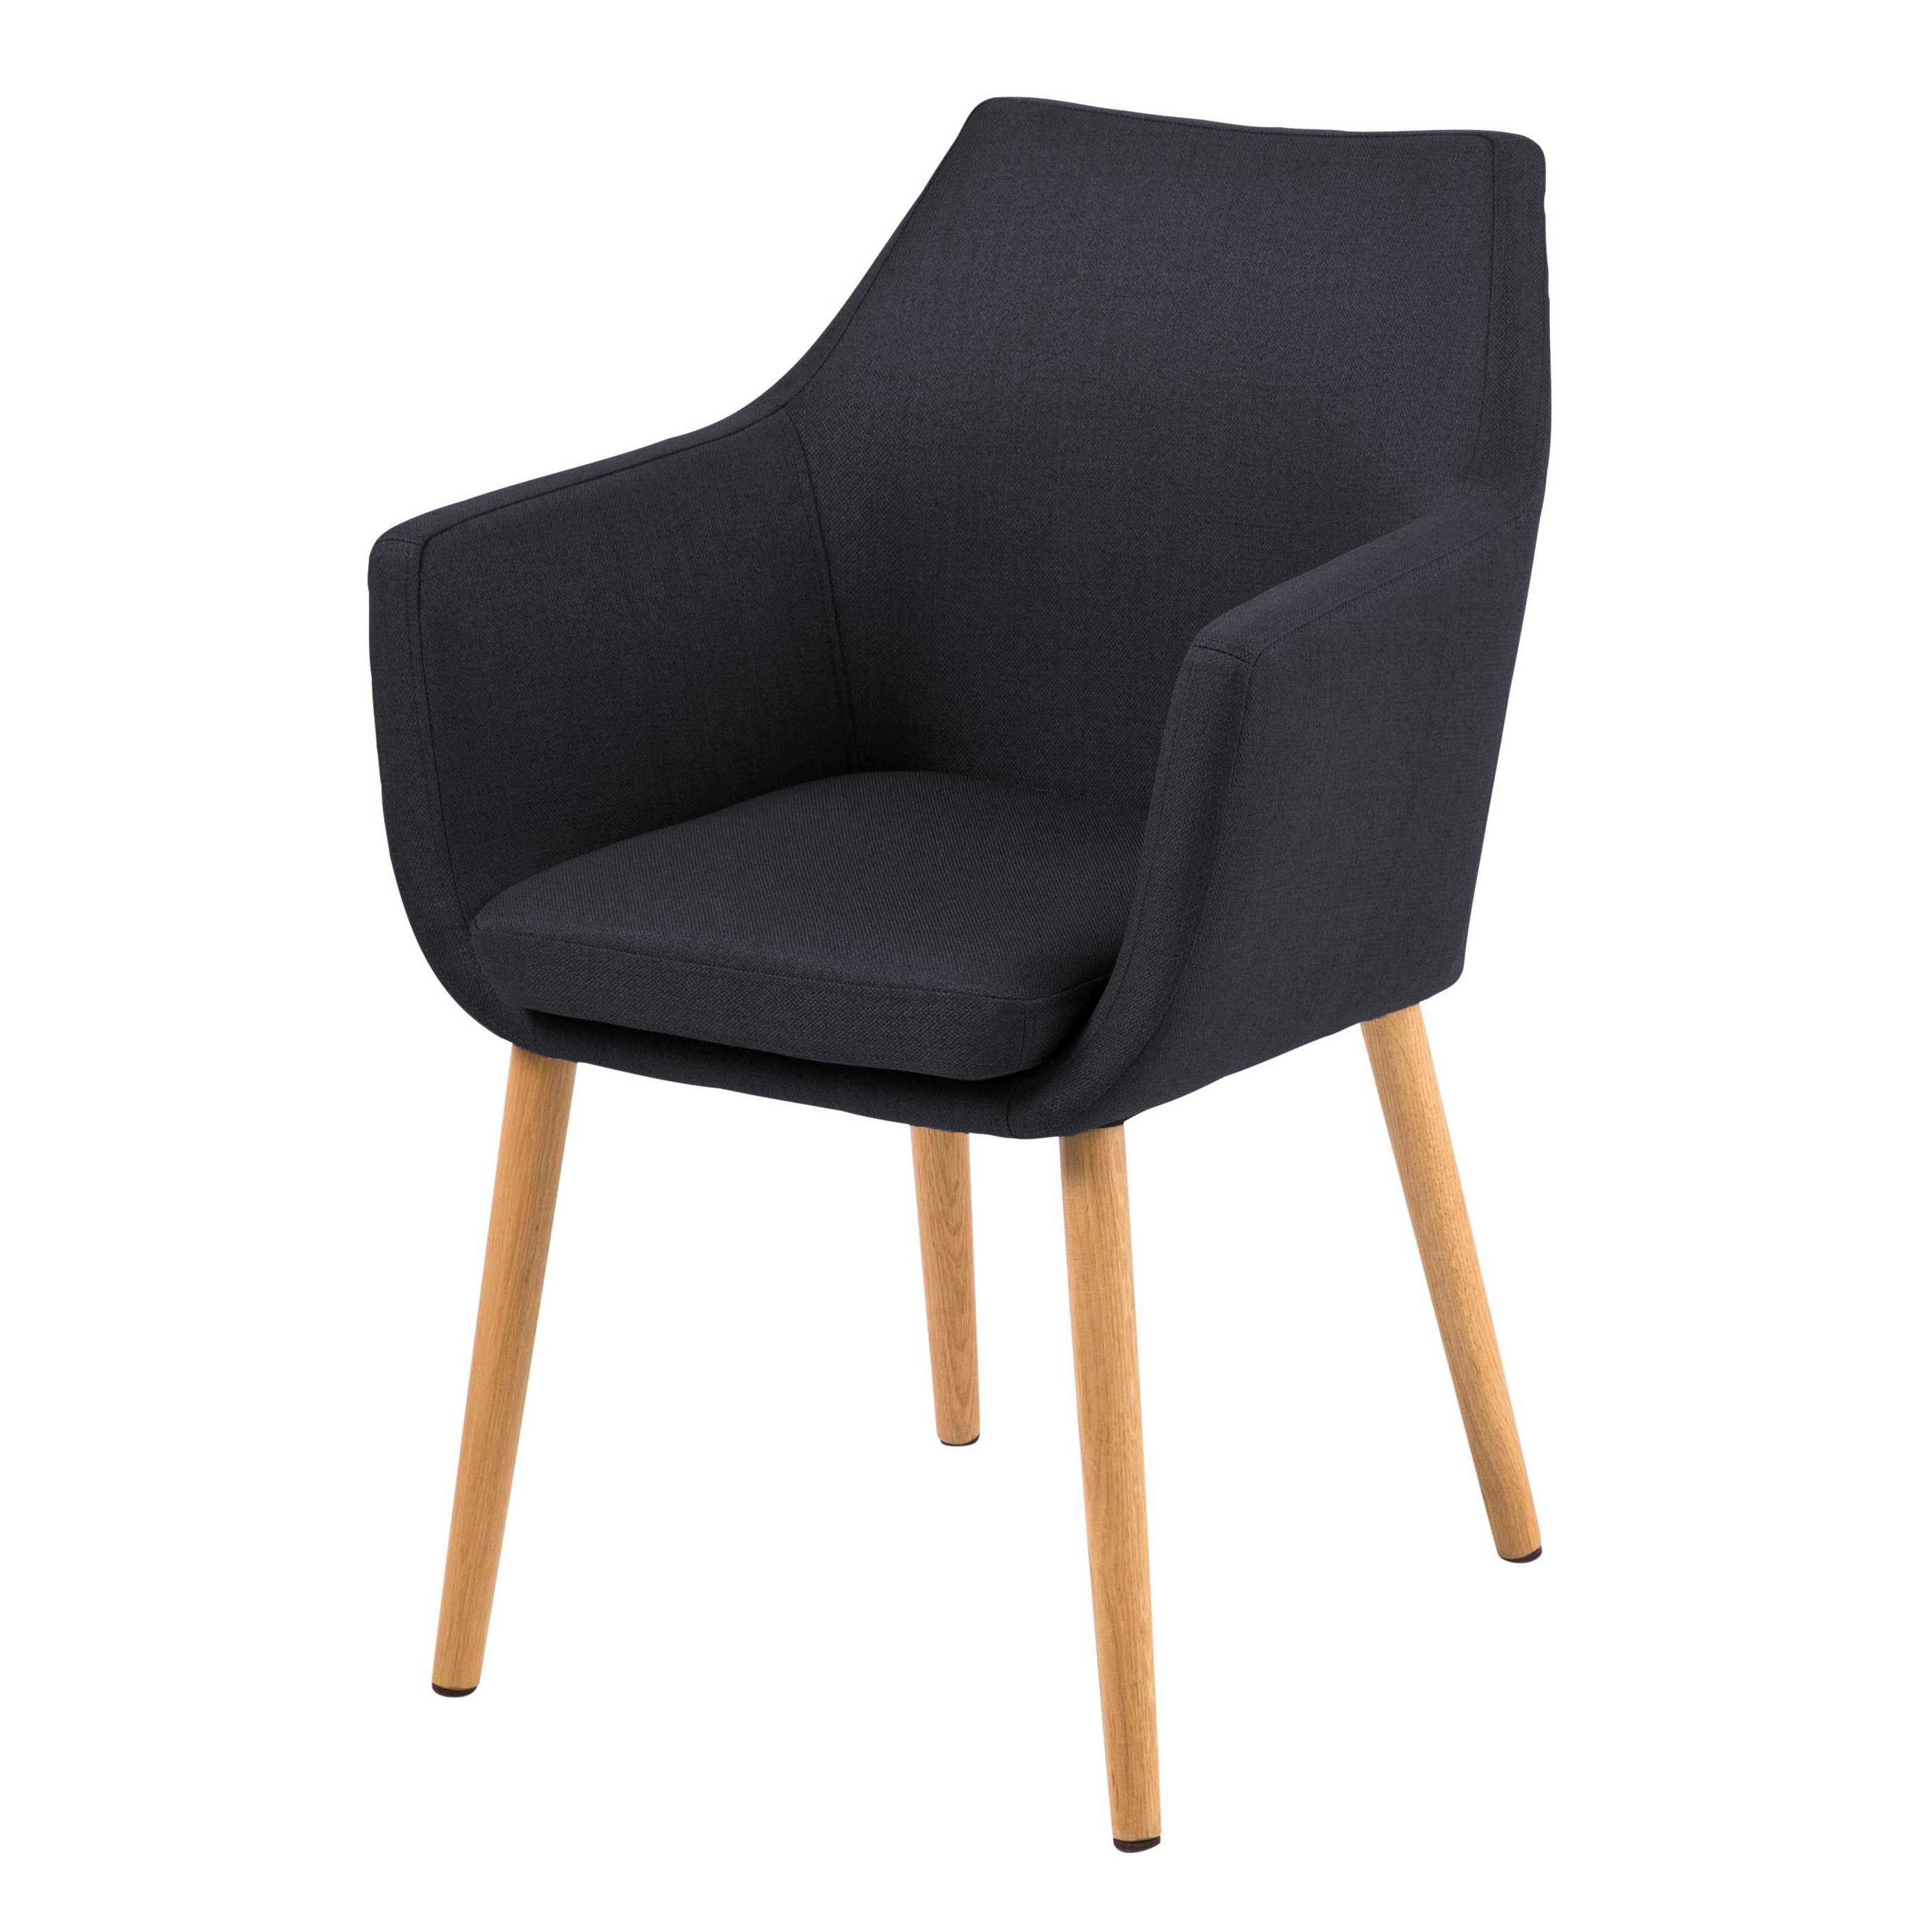 Nuuck Vinder stoel met houten onderstel | Flinders